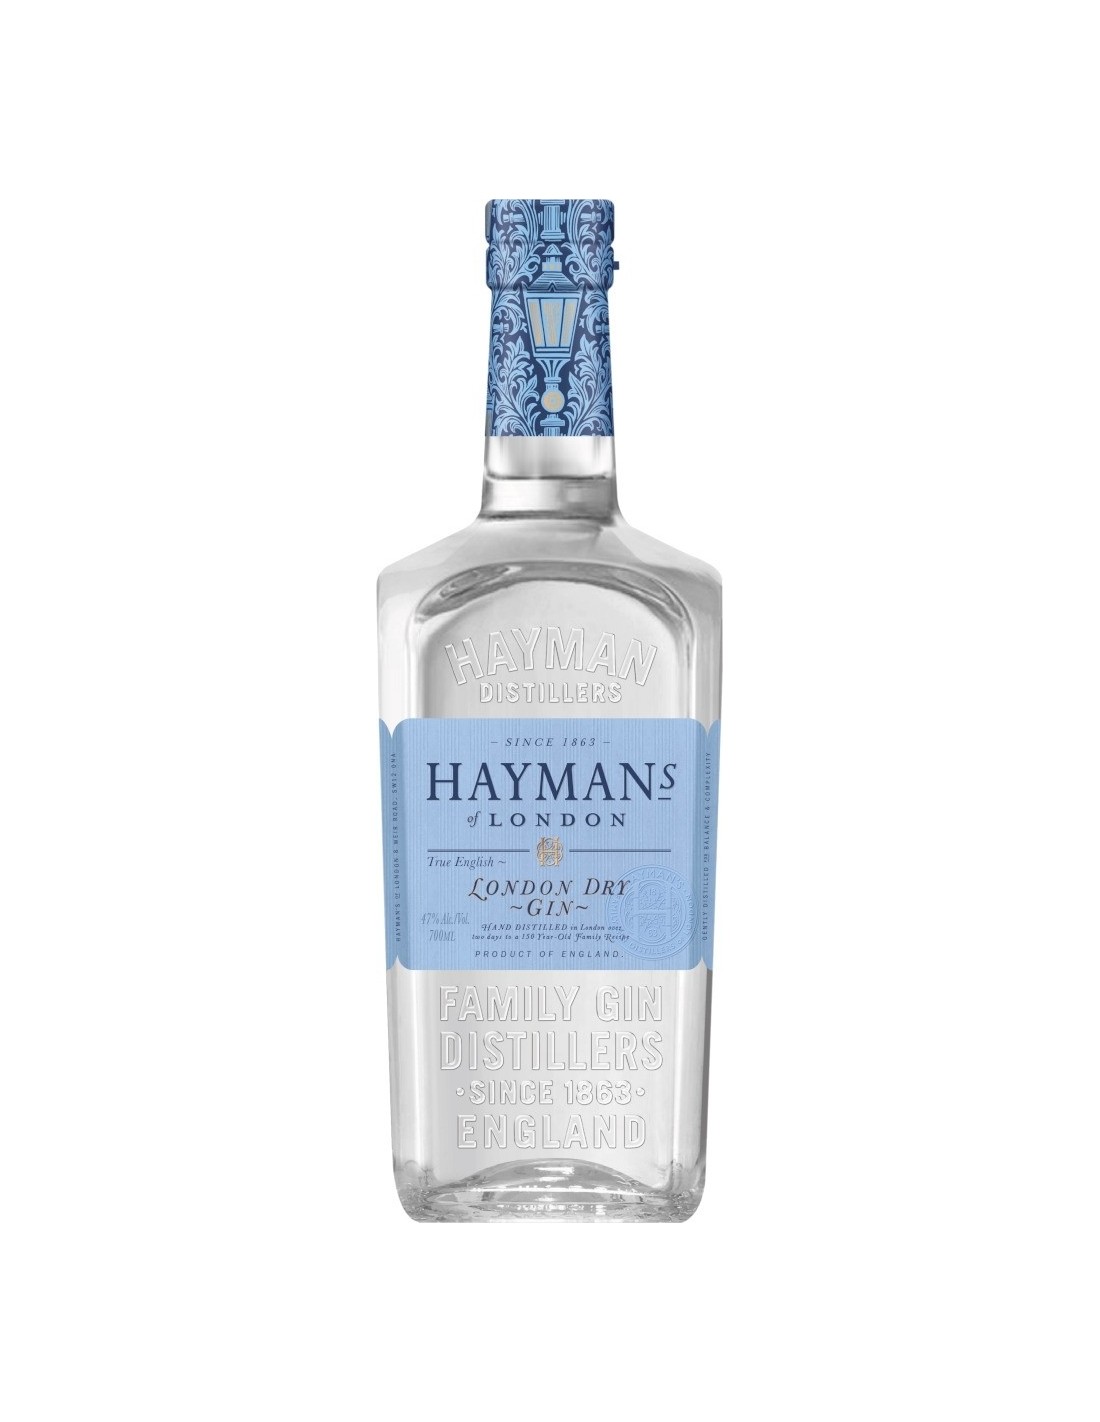 Gin Haymans London Dry Gin, 47% alc., 0.7L, Anglia